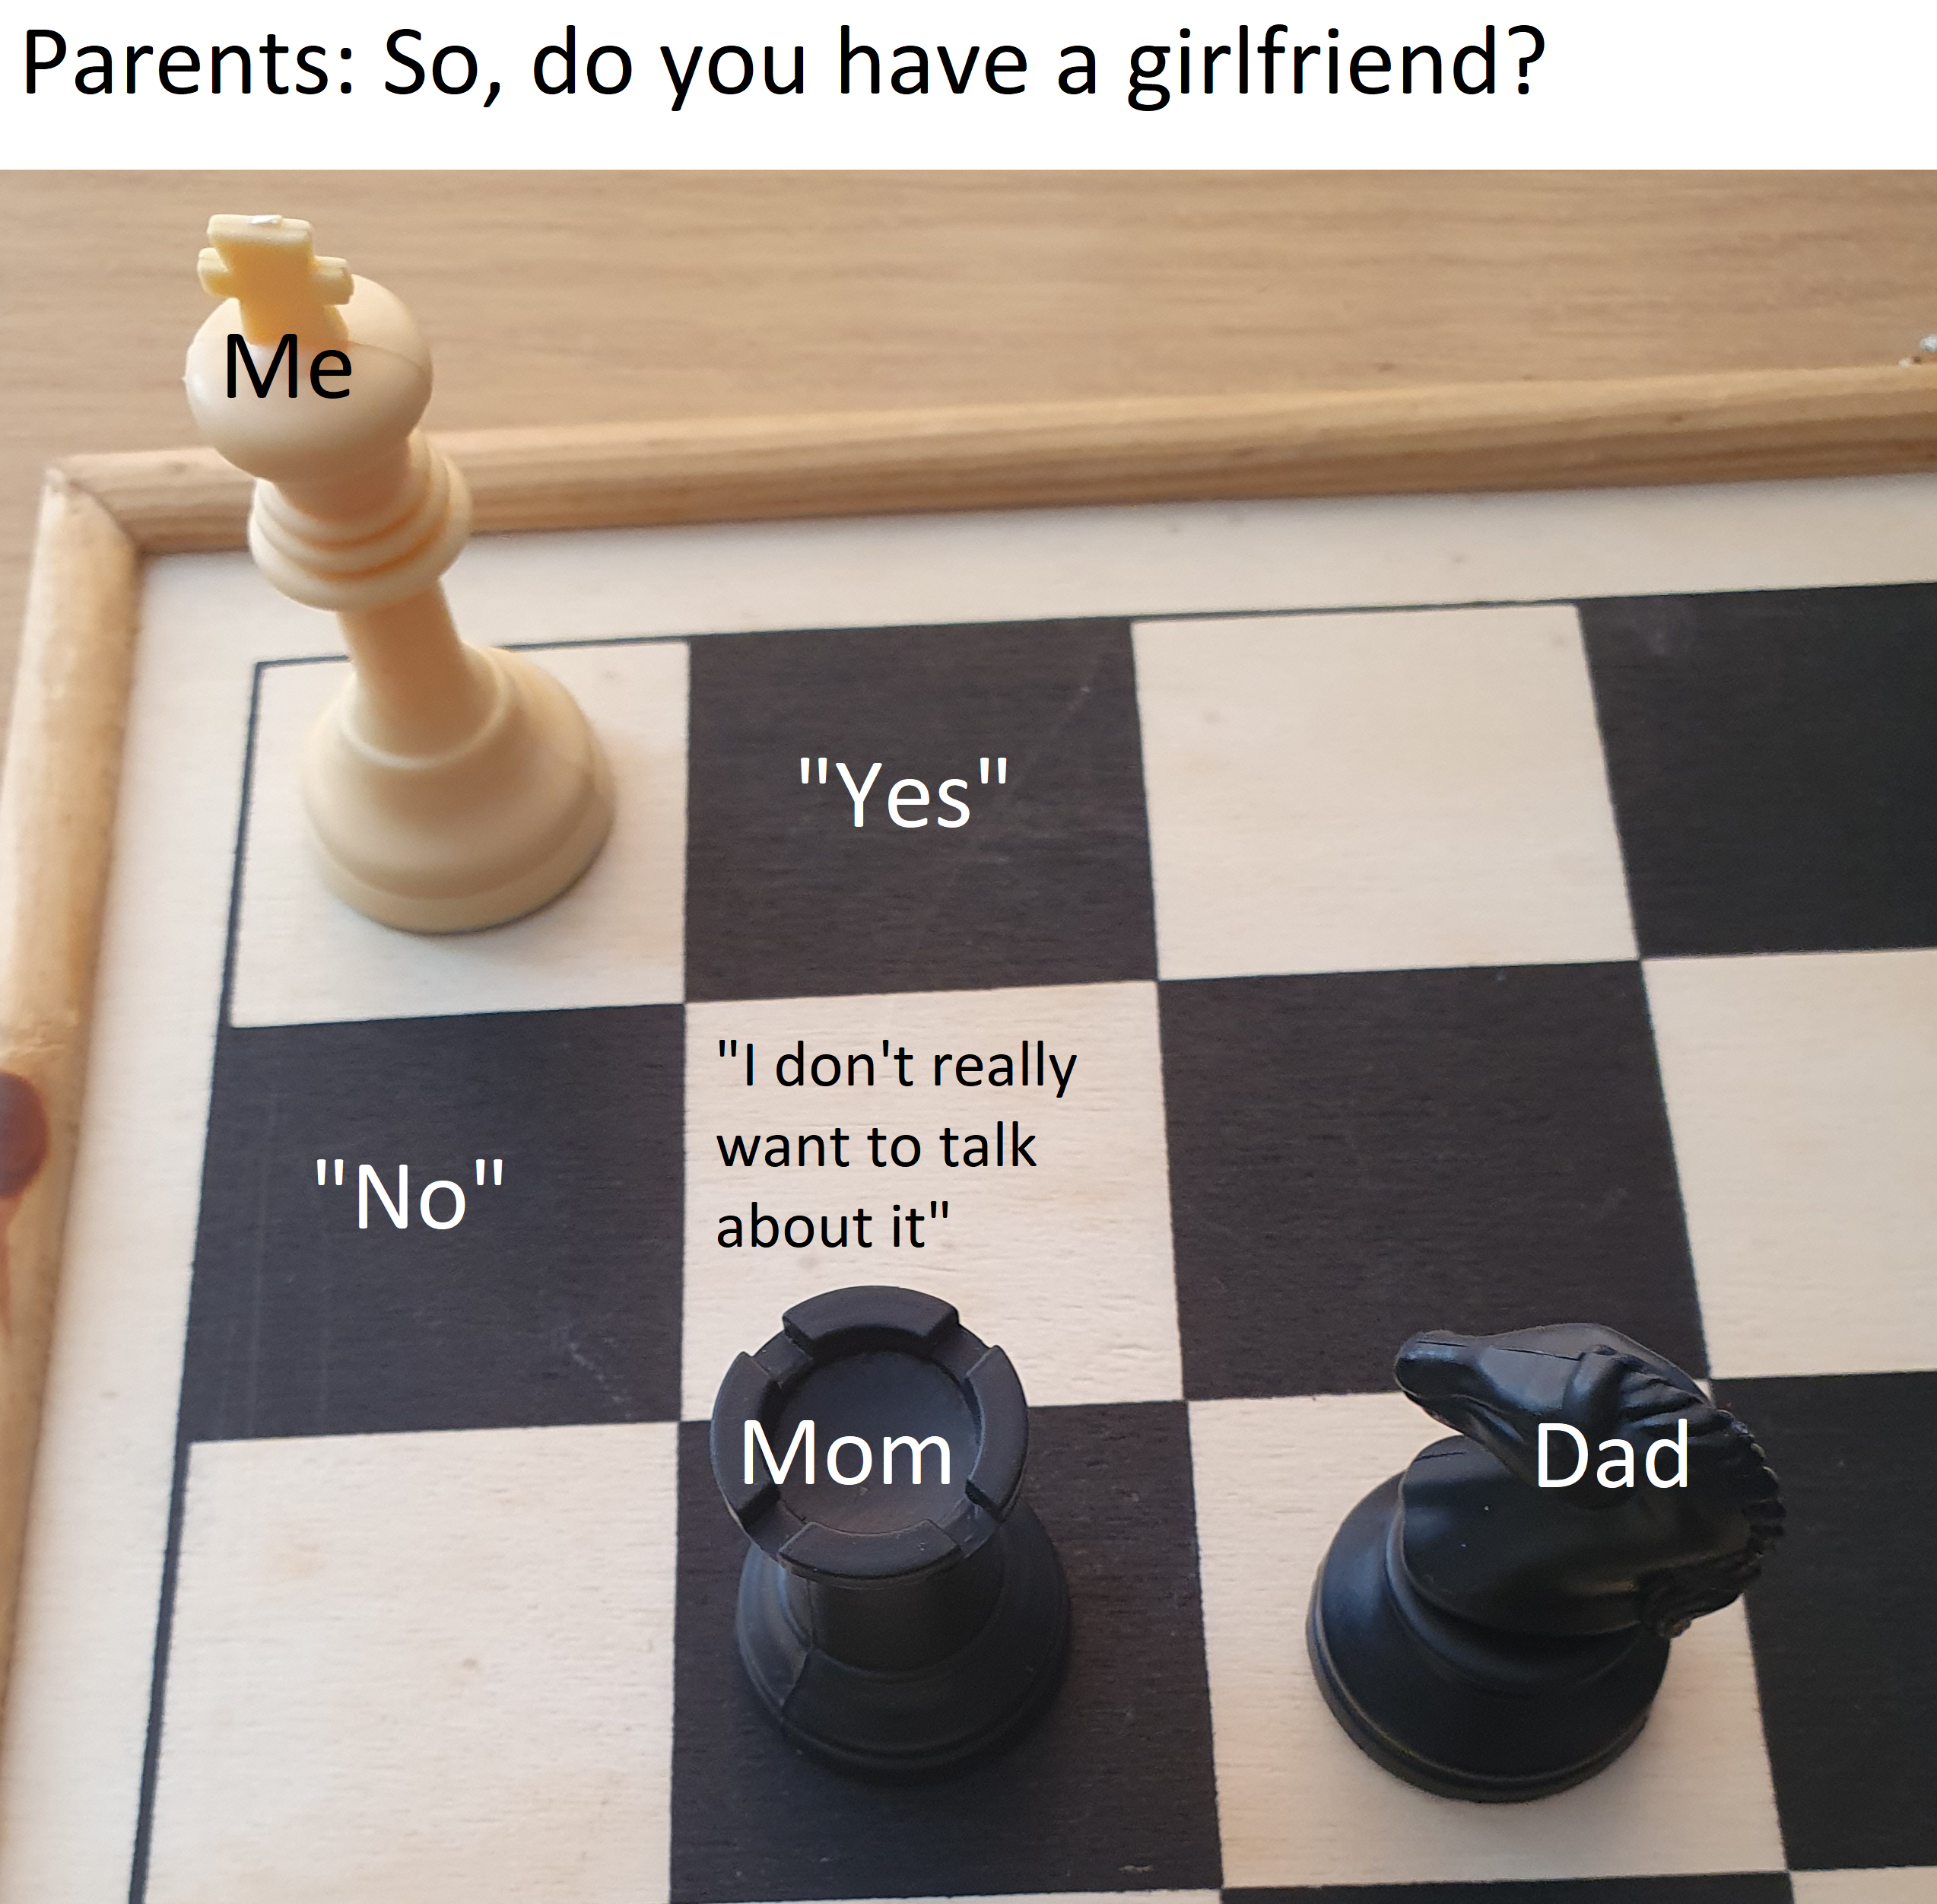 chess memes